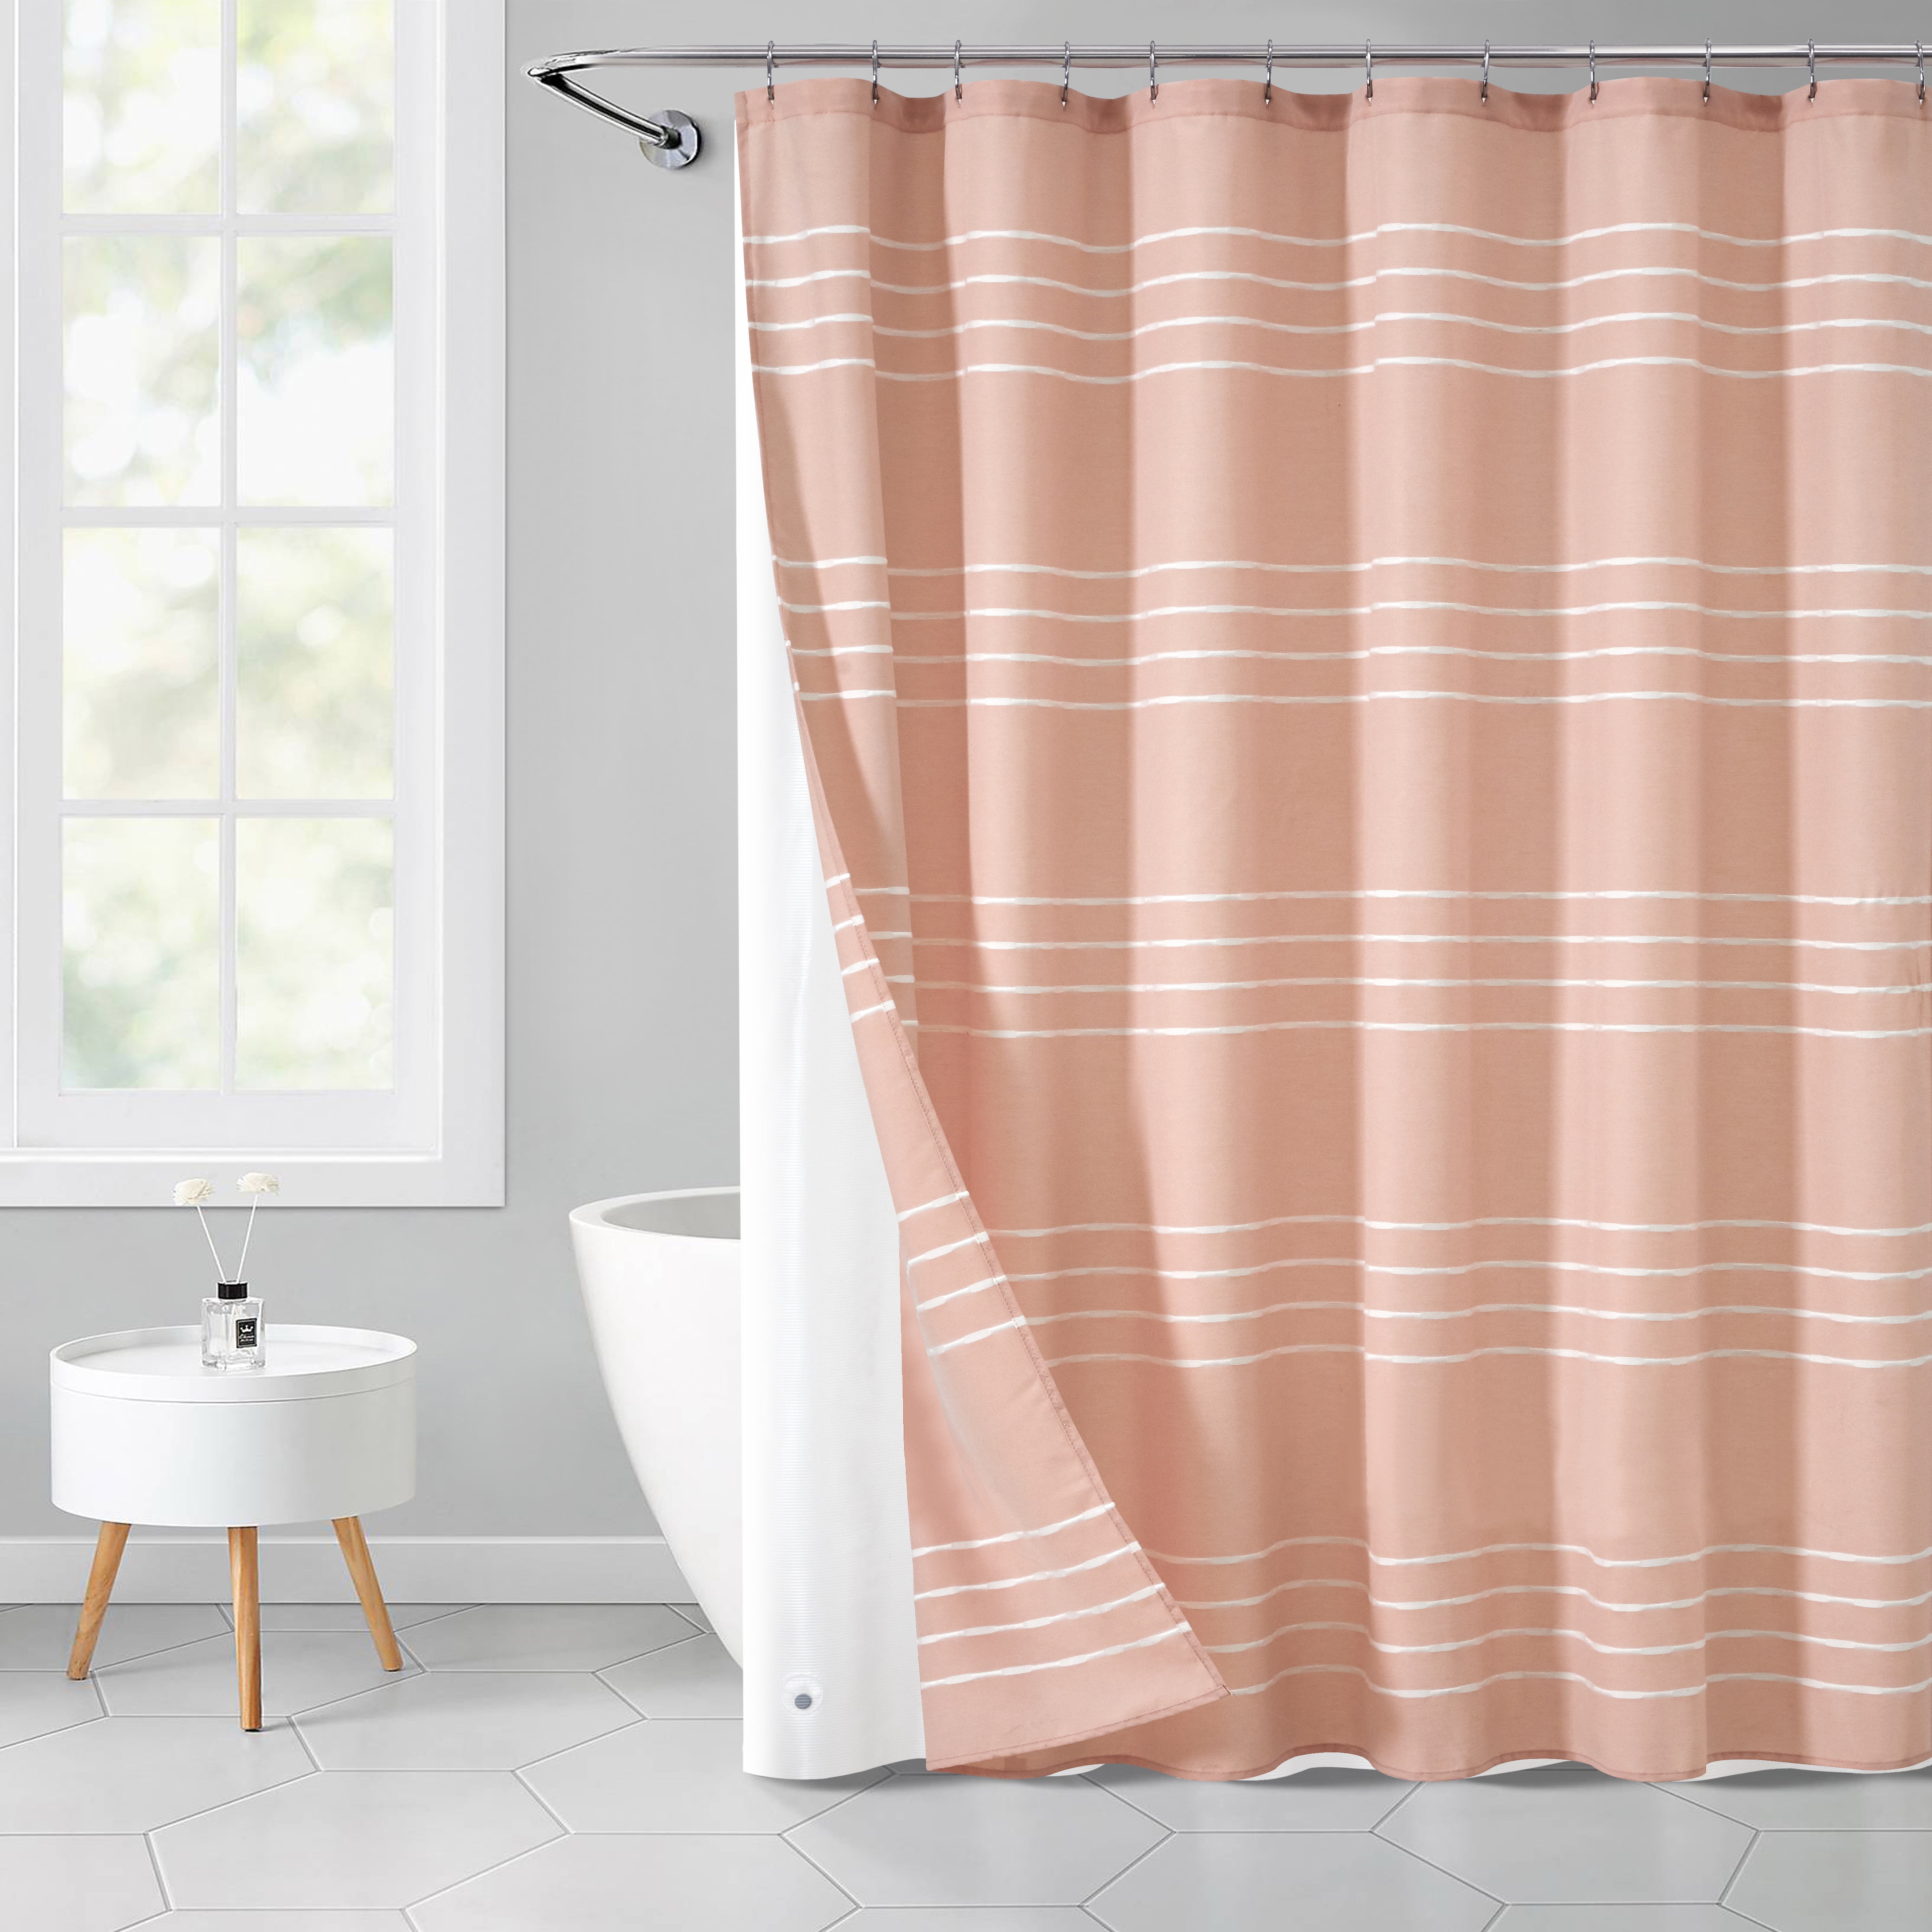 Christmas Truck Shower Curtain Set Waterproof Fabric Bathroom Decor Free Hooks 